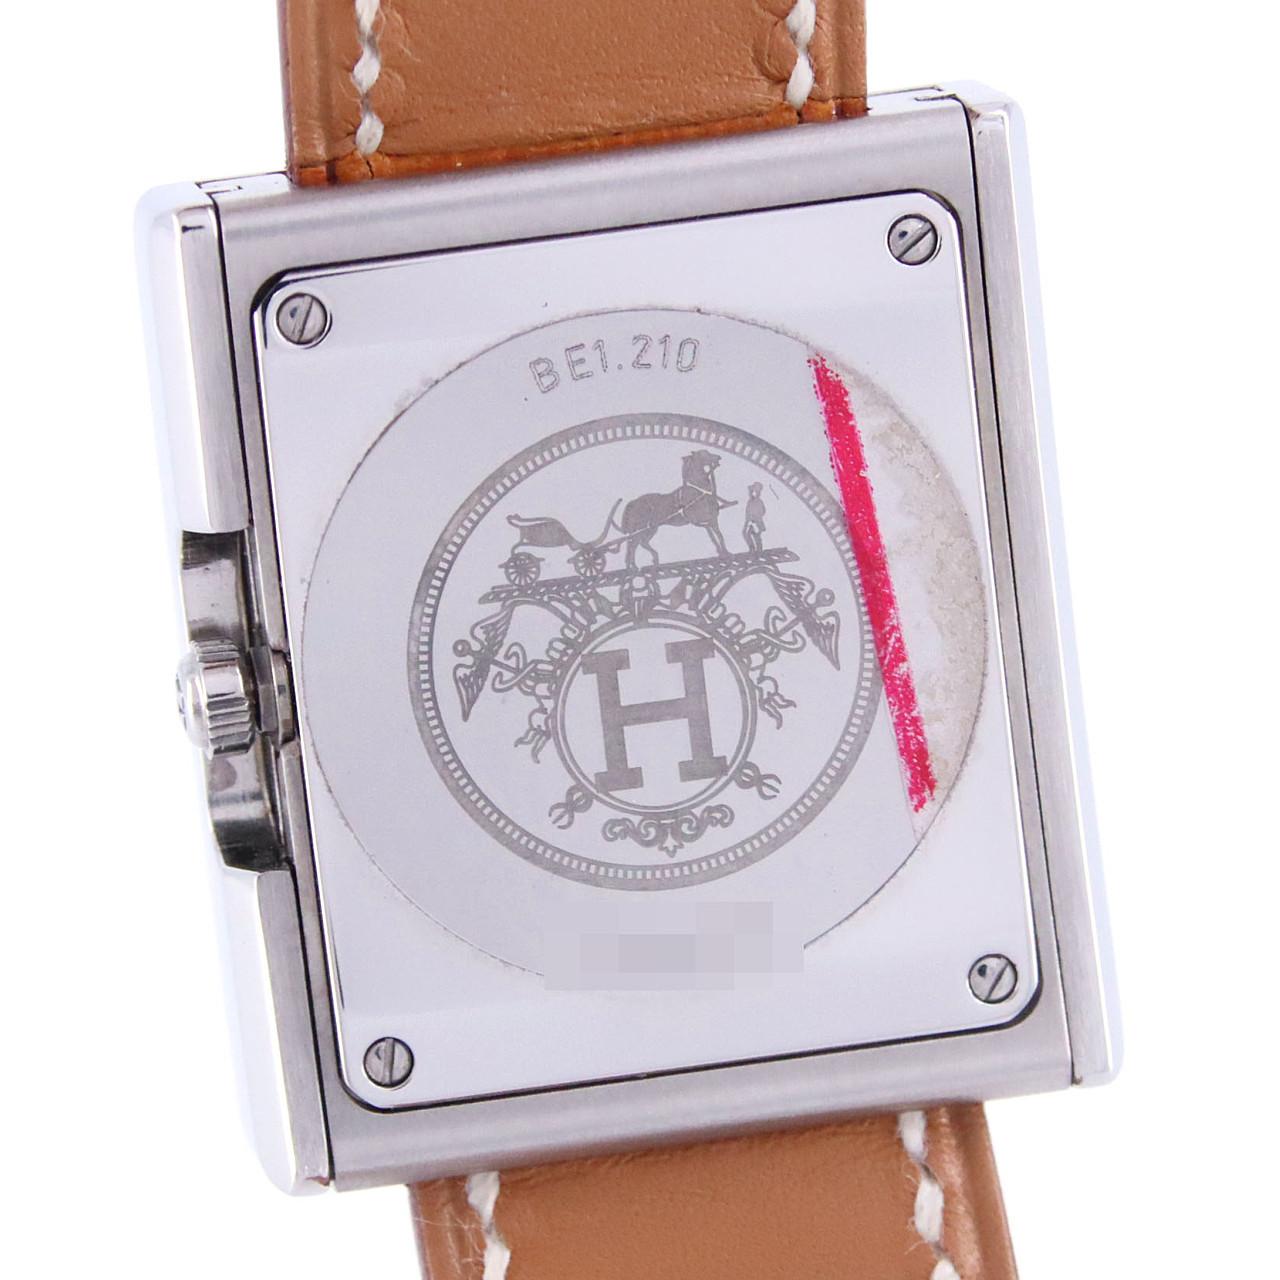 HERMES エルメス ベルトウオッチ BE1.210 □P 腕時計 SS×レザー 水色 ...